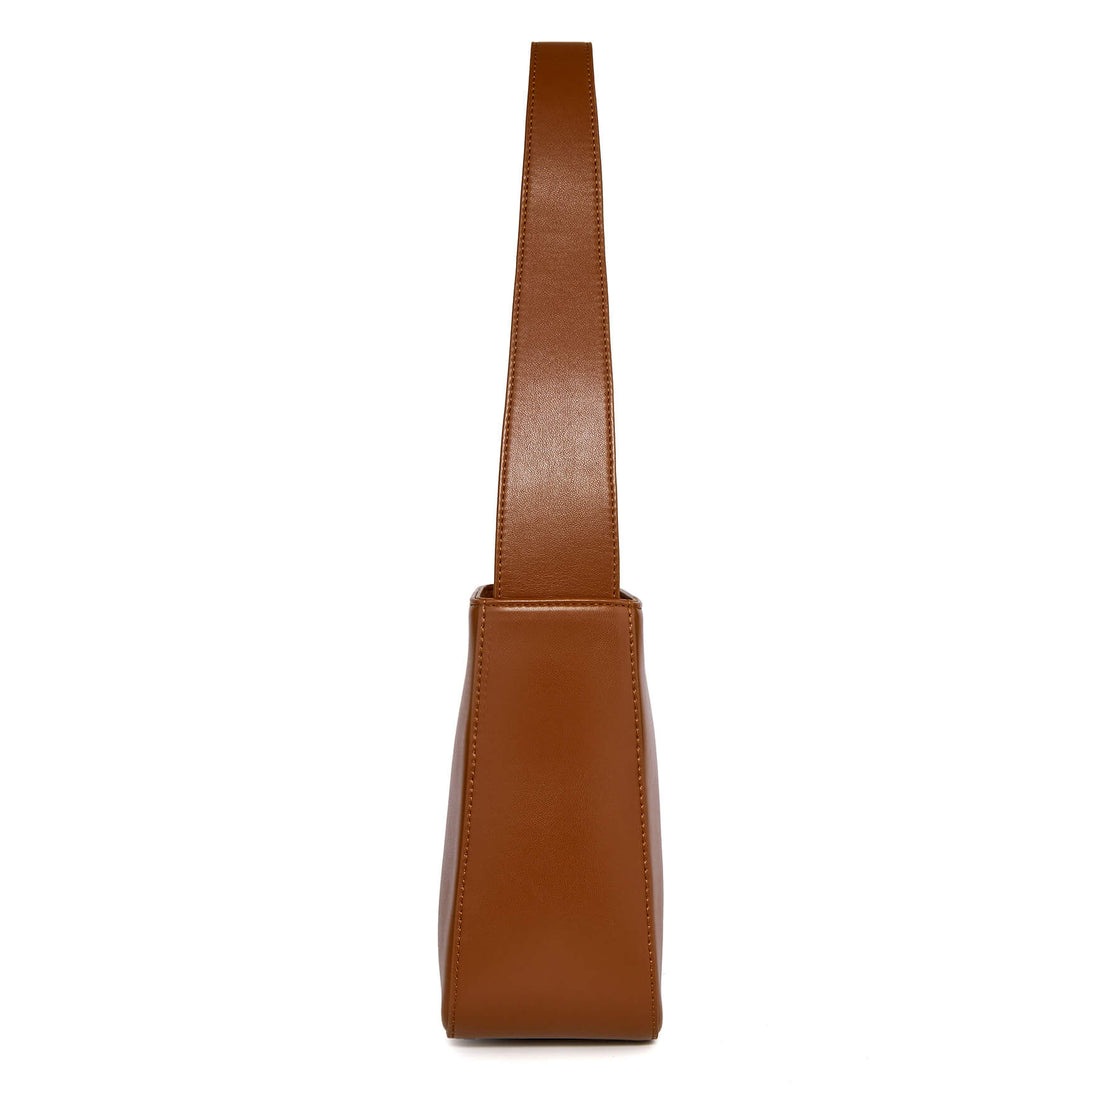 SINBONO Square Shoulder Bag For Women - Eco-Friendly Leather Bag